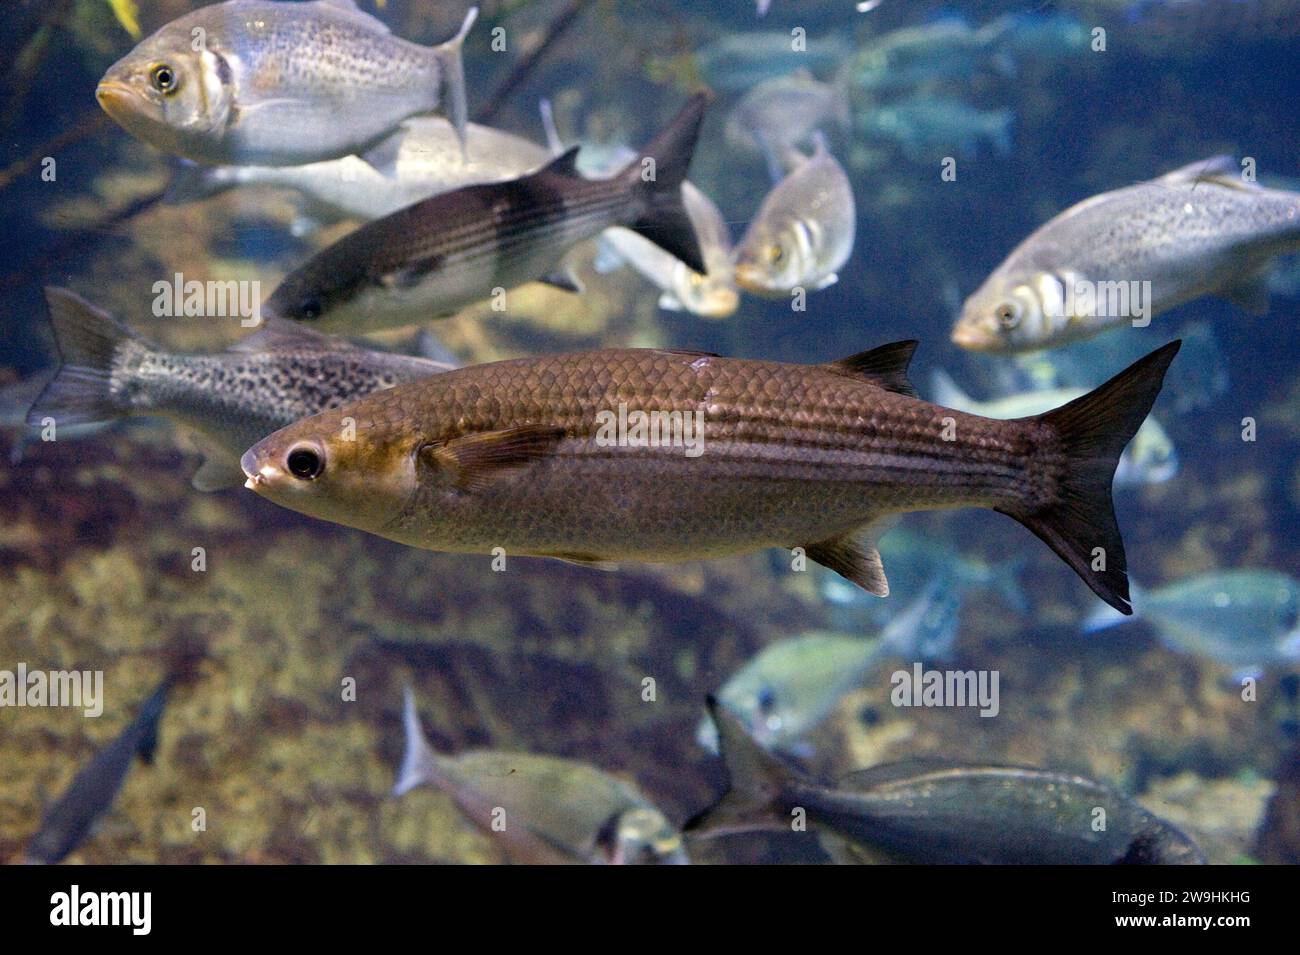 Thicklip grey mullet (Chelon labrosus) is a marine fish native to Mediterranean Sea, European Atlantic coast and northern Africa coast. Stock Photo